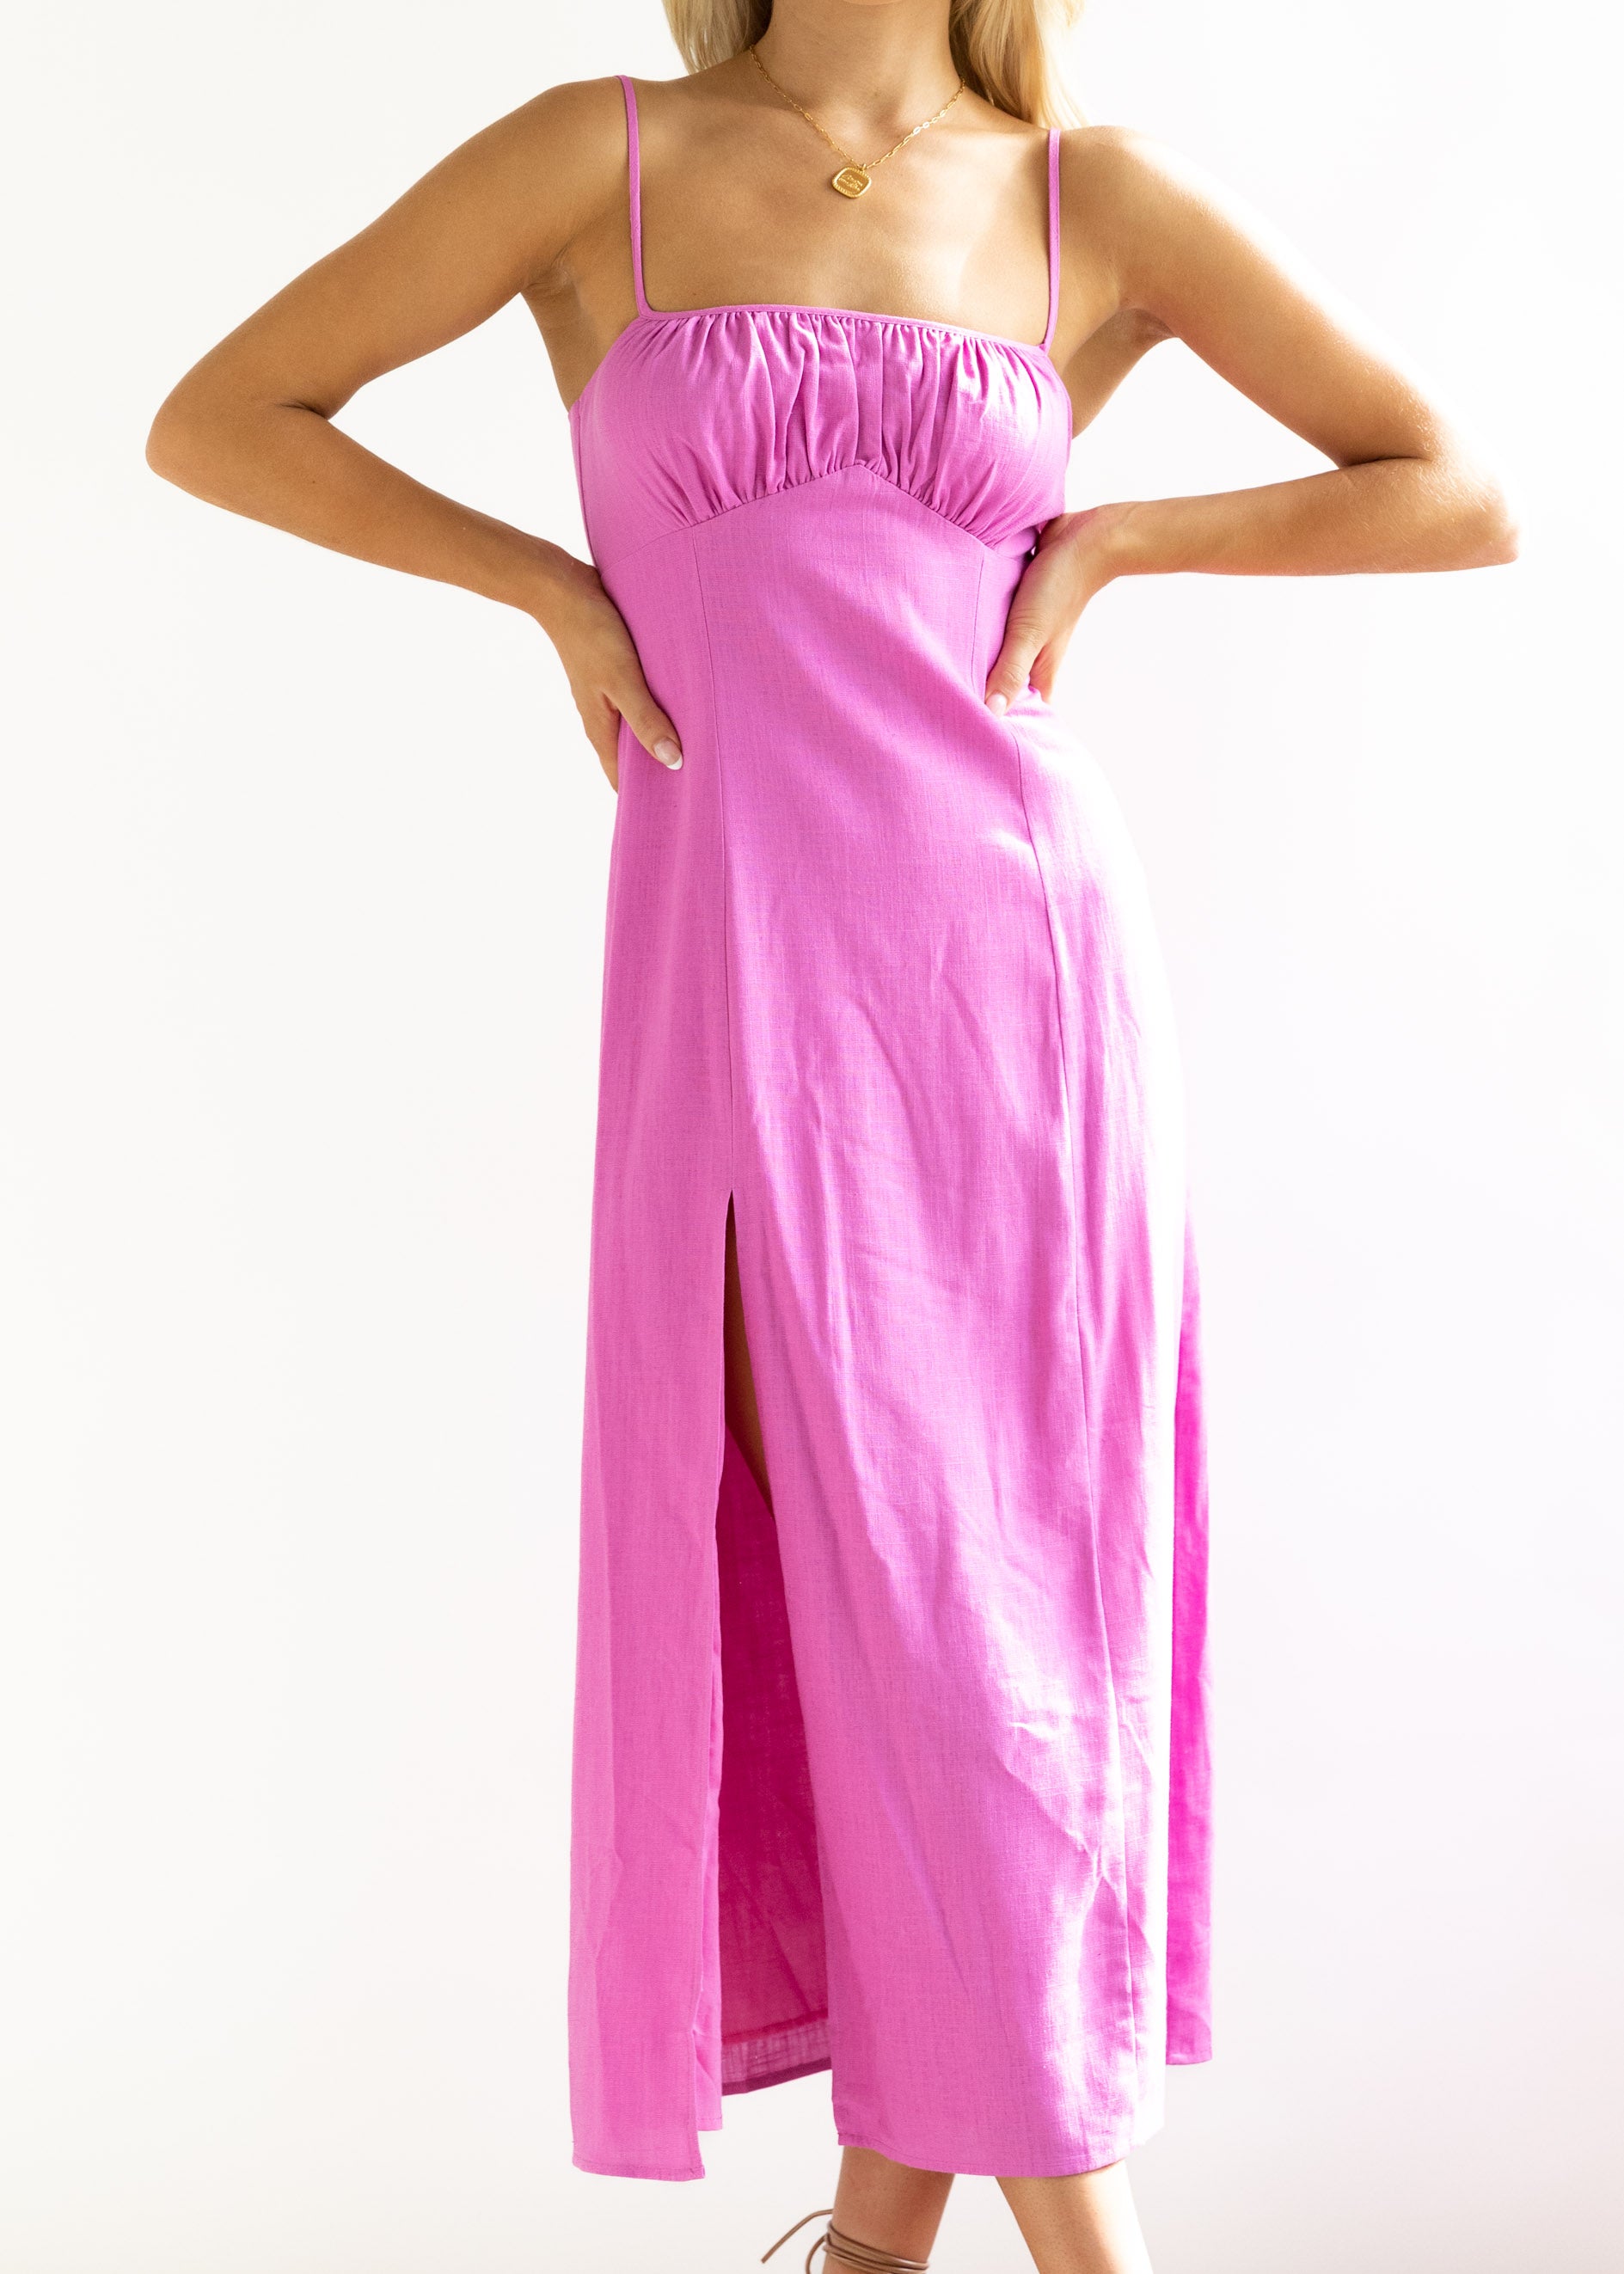 Kodi Midi Dress - Hot Pink